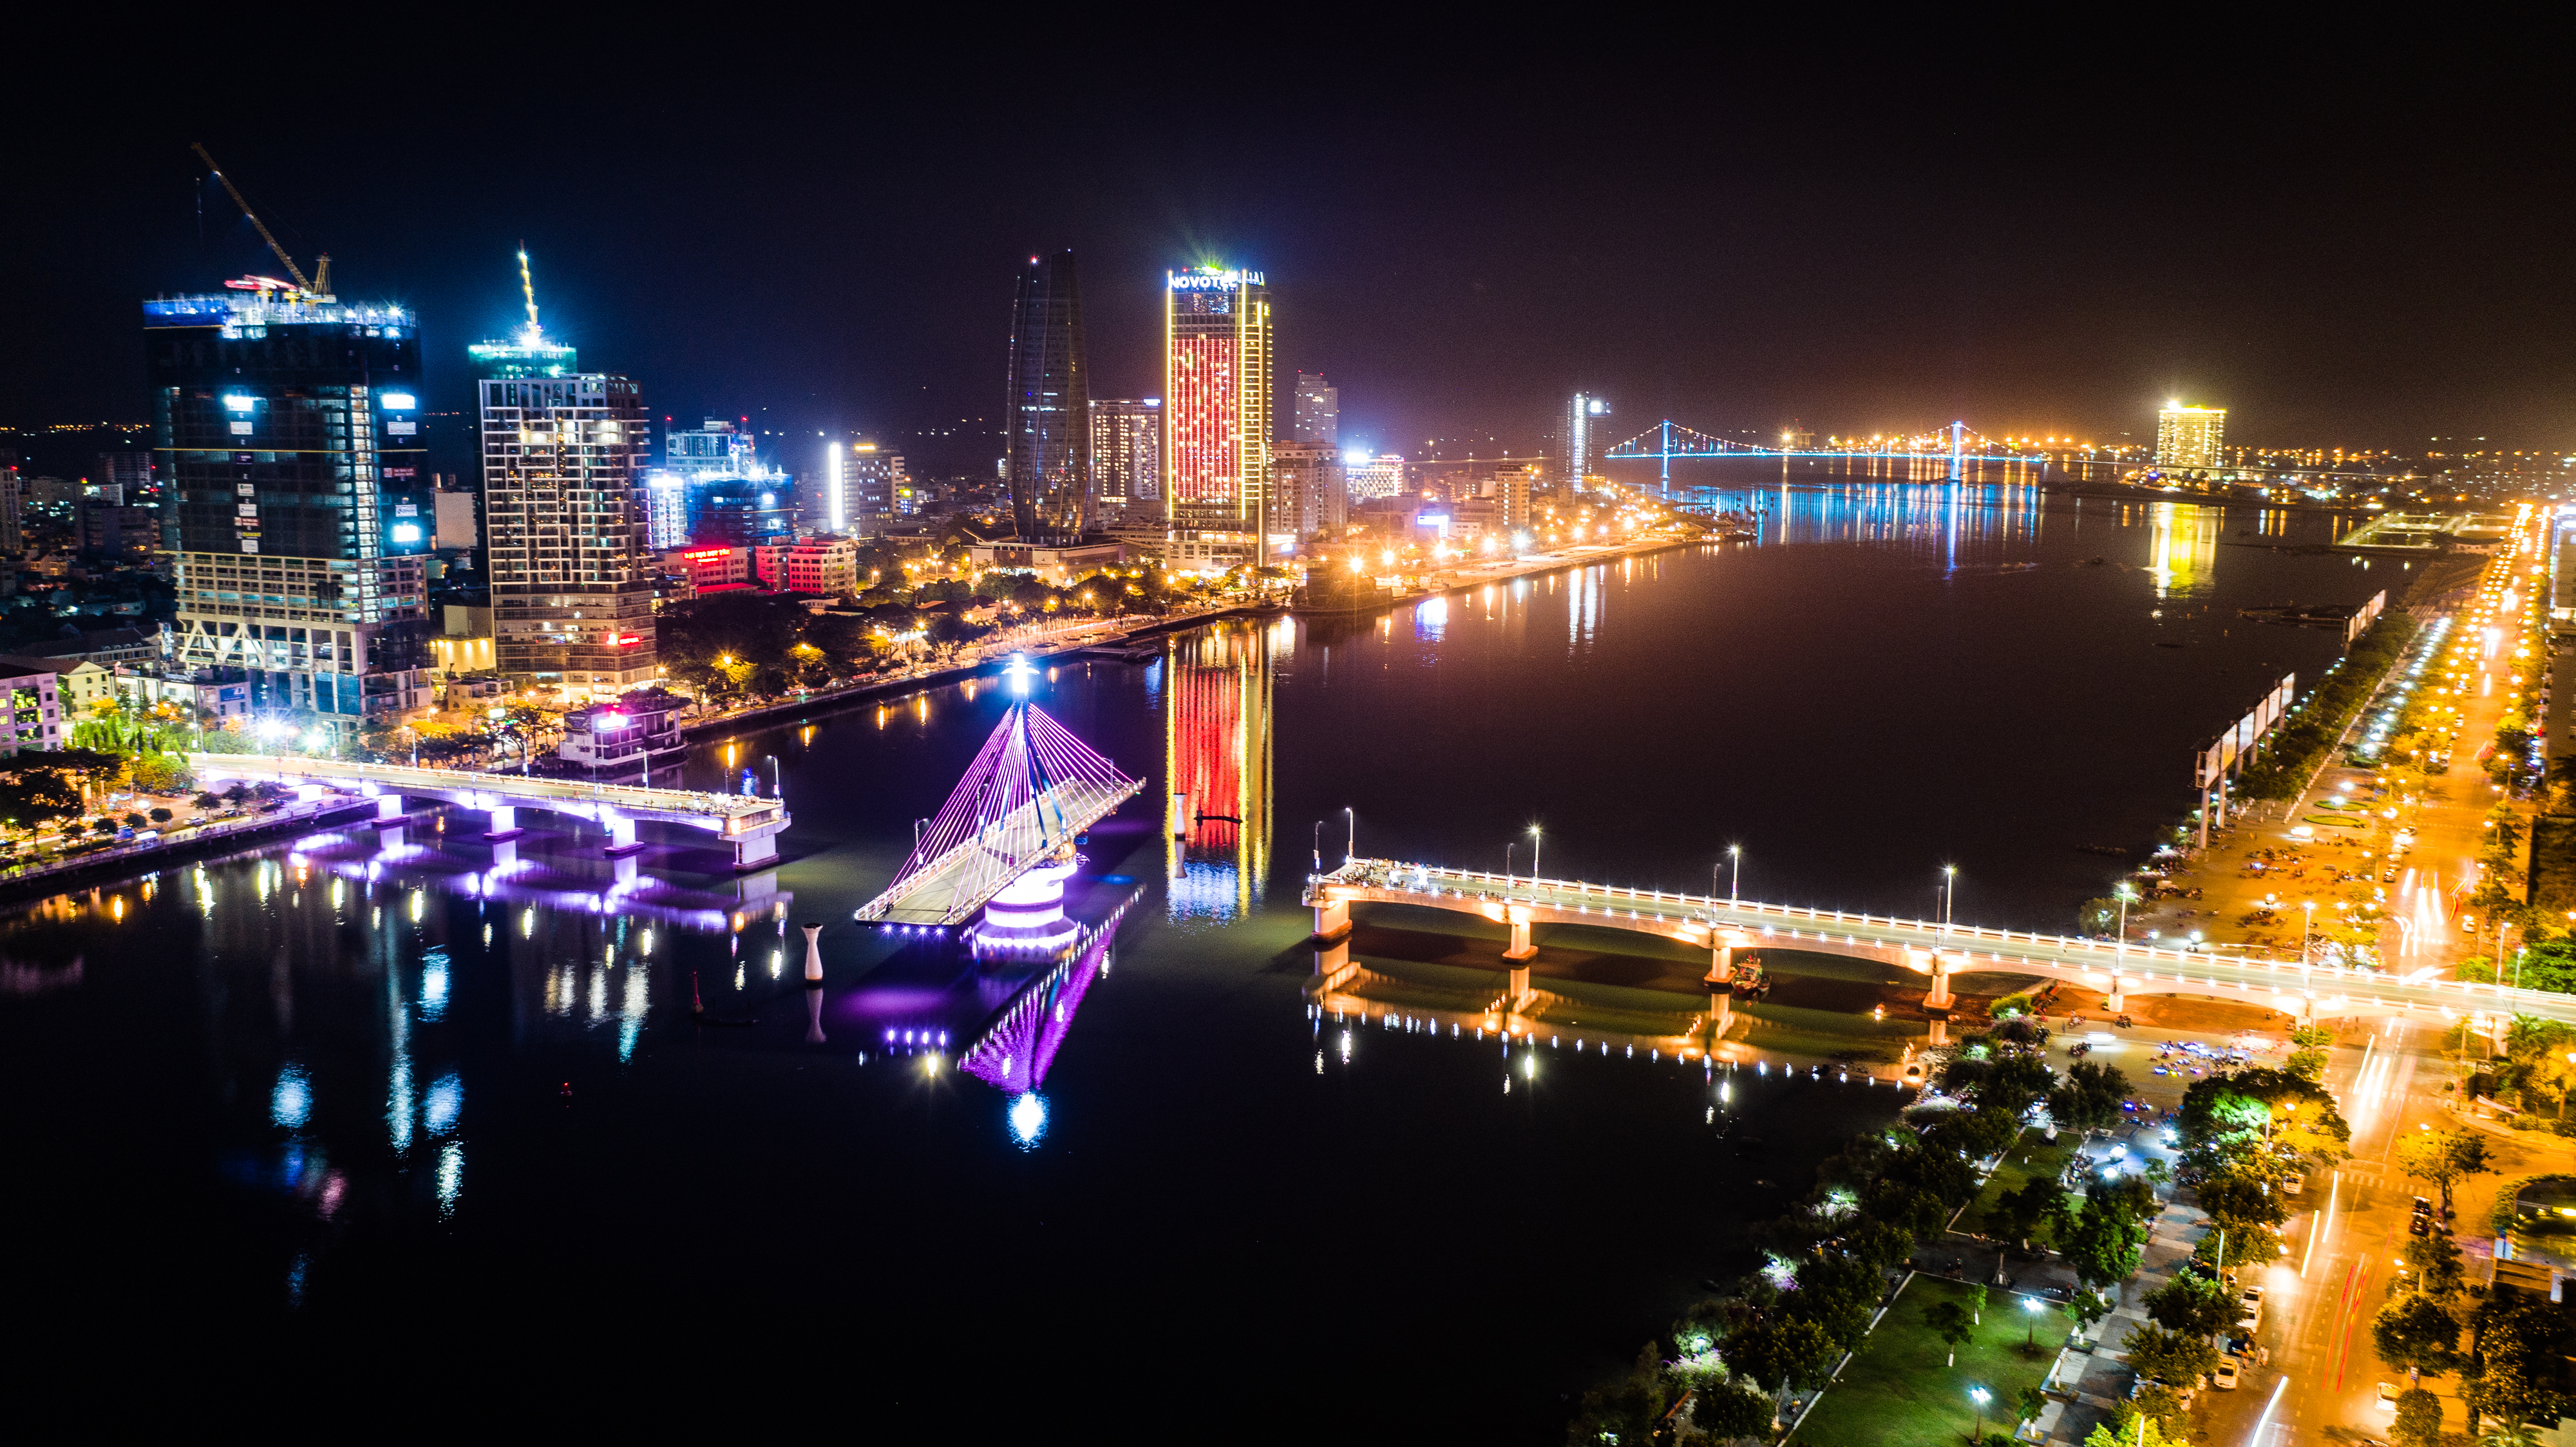 Google Arts & Culture brings vivid, energetic Vietnam to the world